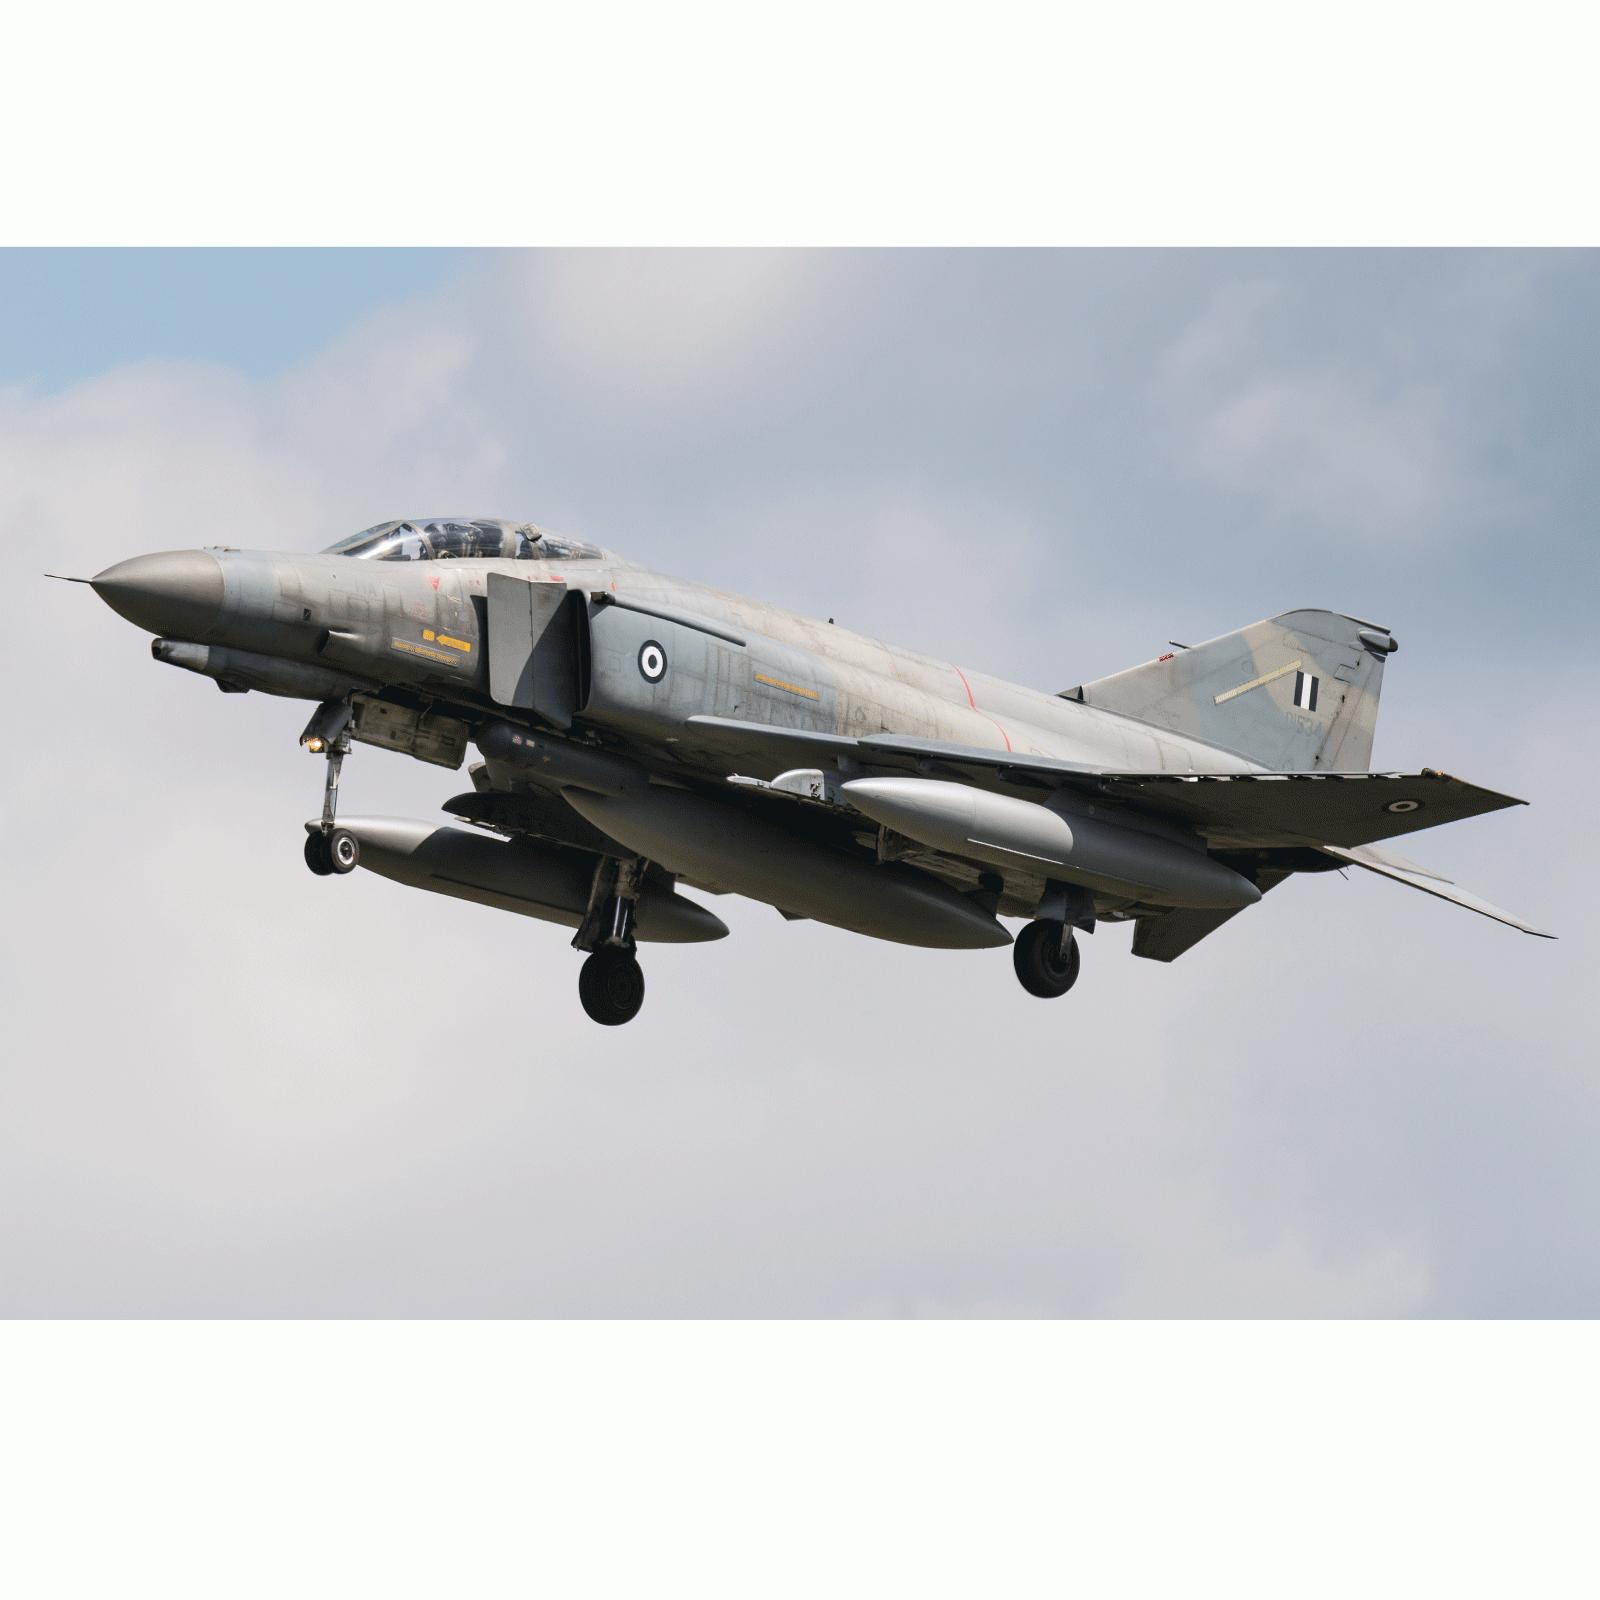 F-4 Phantom II – BeAvPhoto / Shutterstock